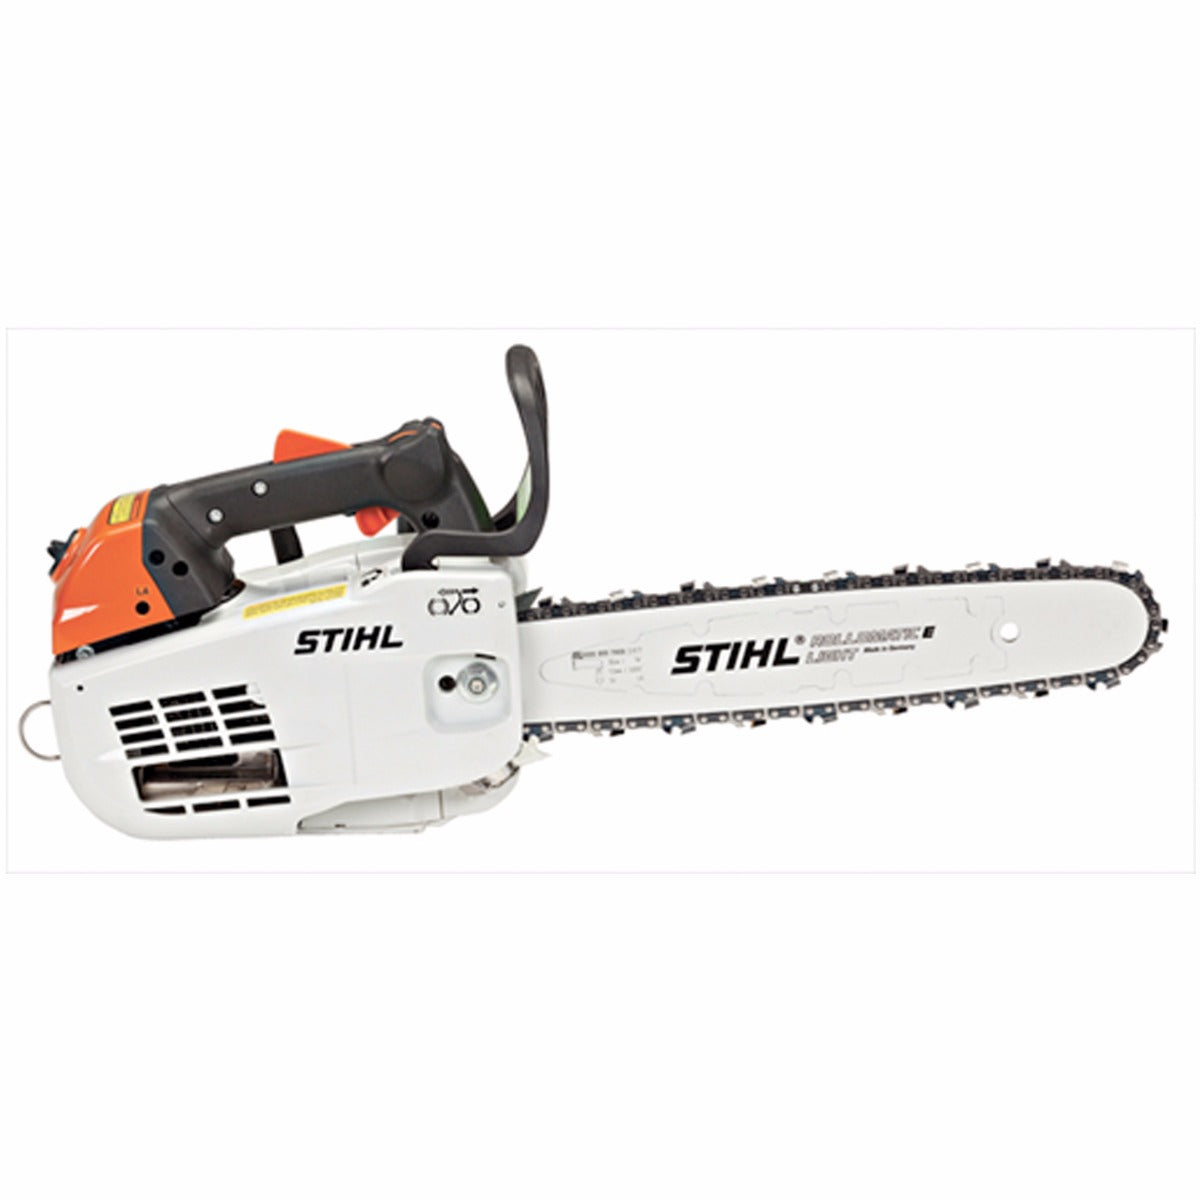 Stihl MS 201 T C-M Chainsaw — Russo Power Equipment